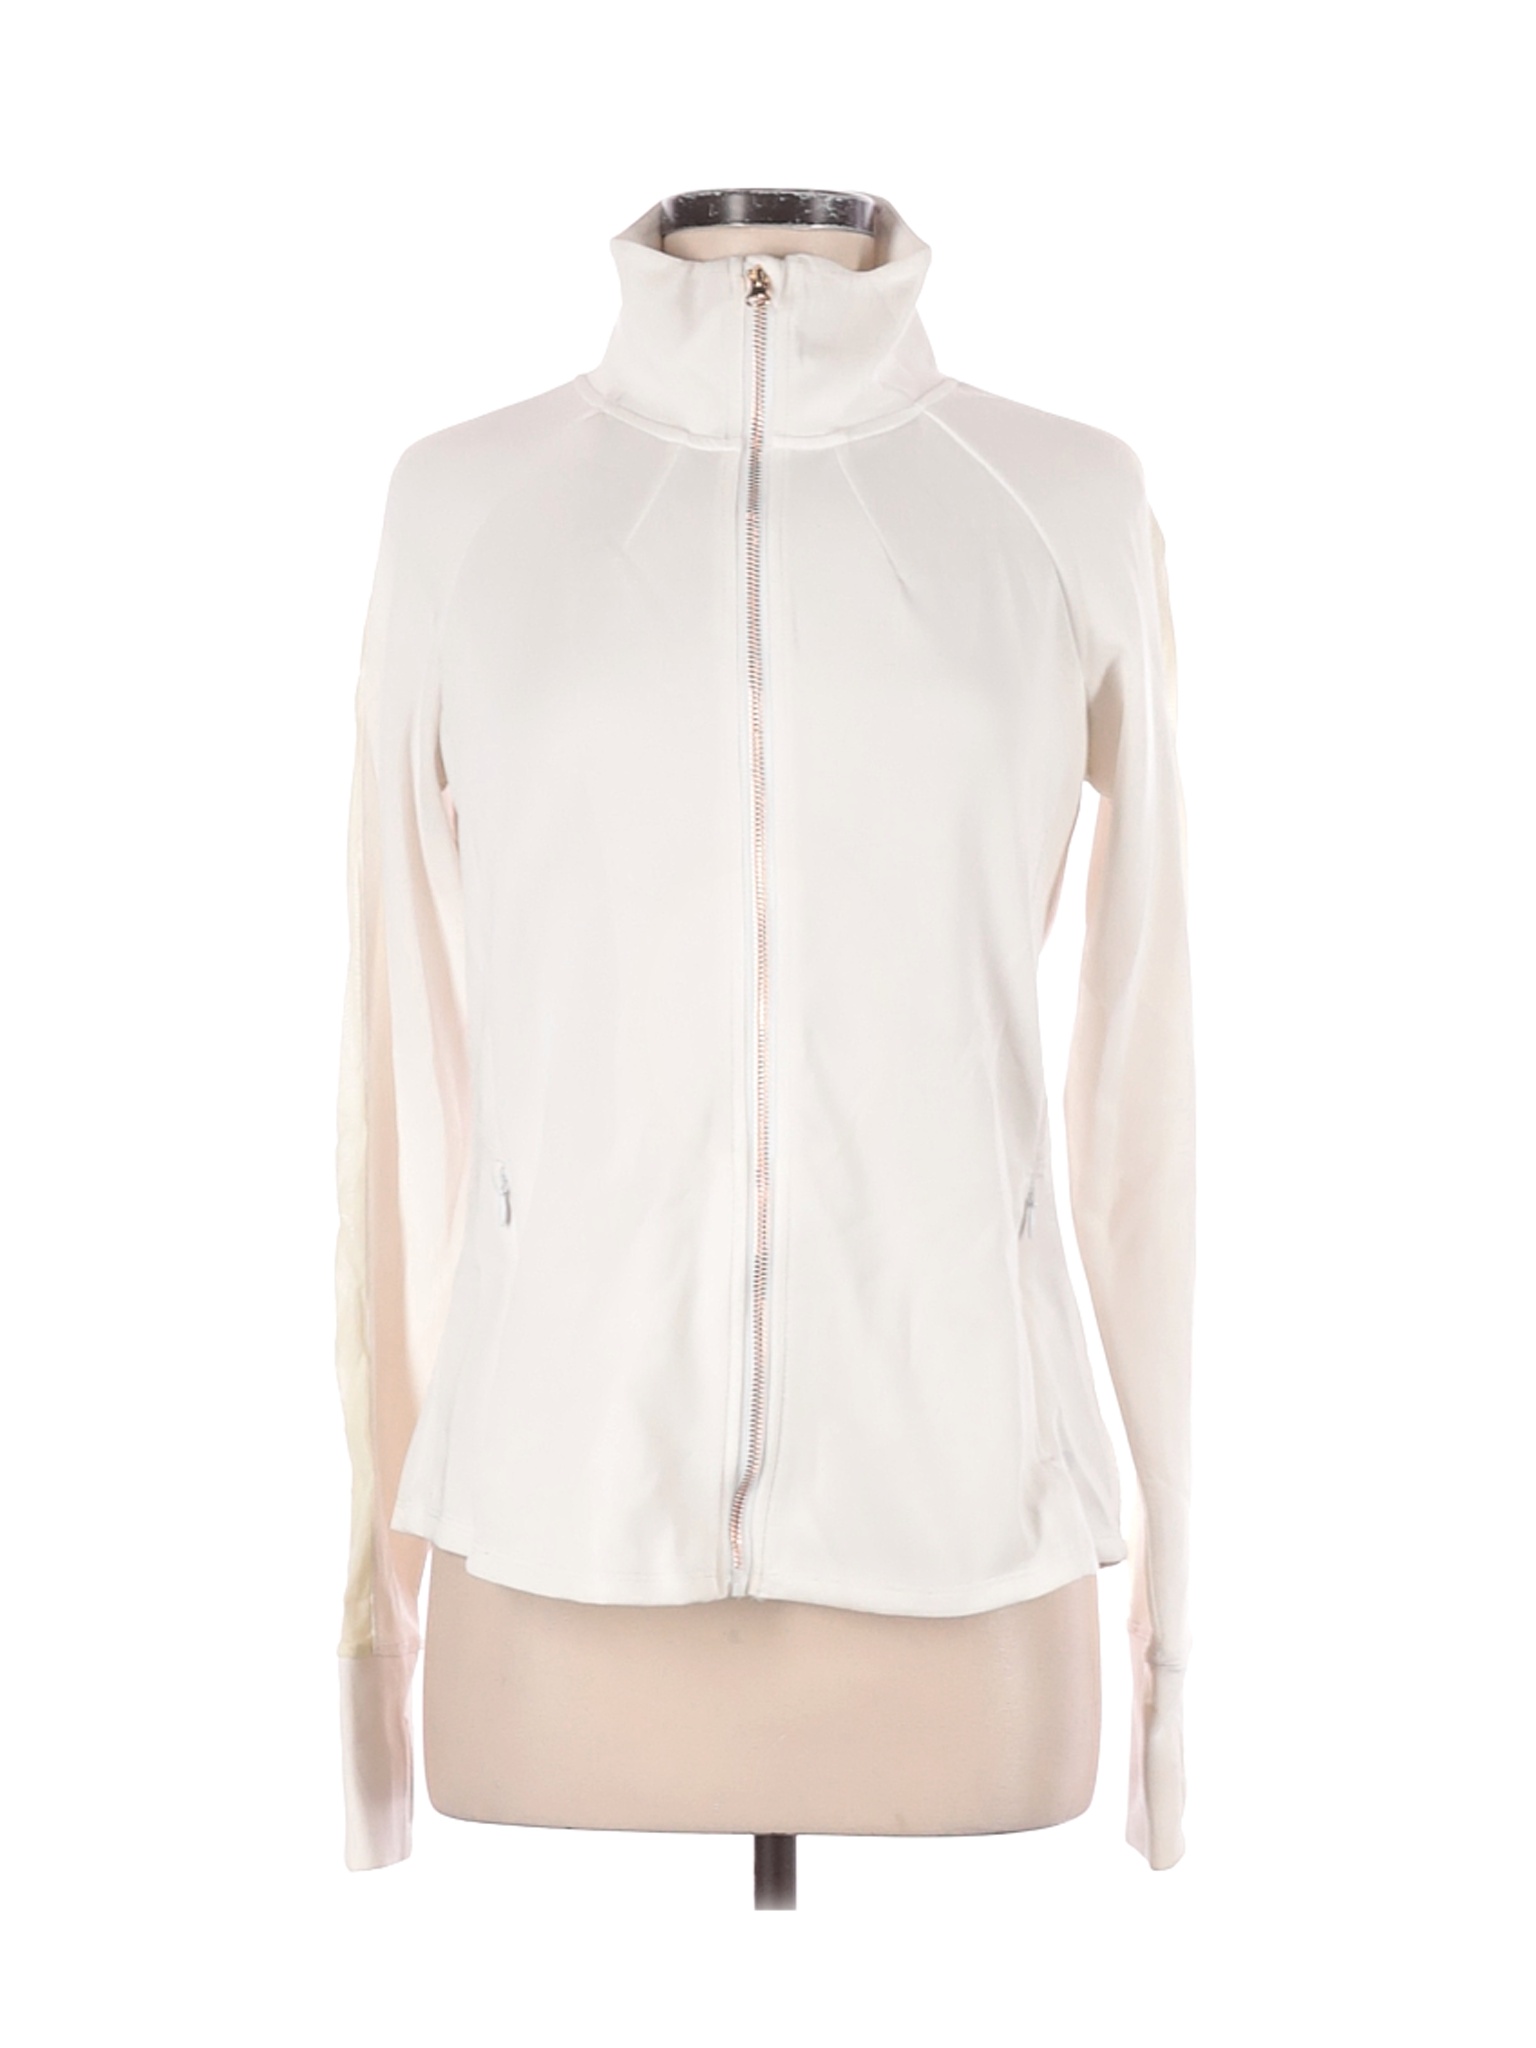 Apana Women White Track Jacket M | eBay